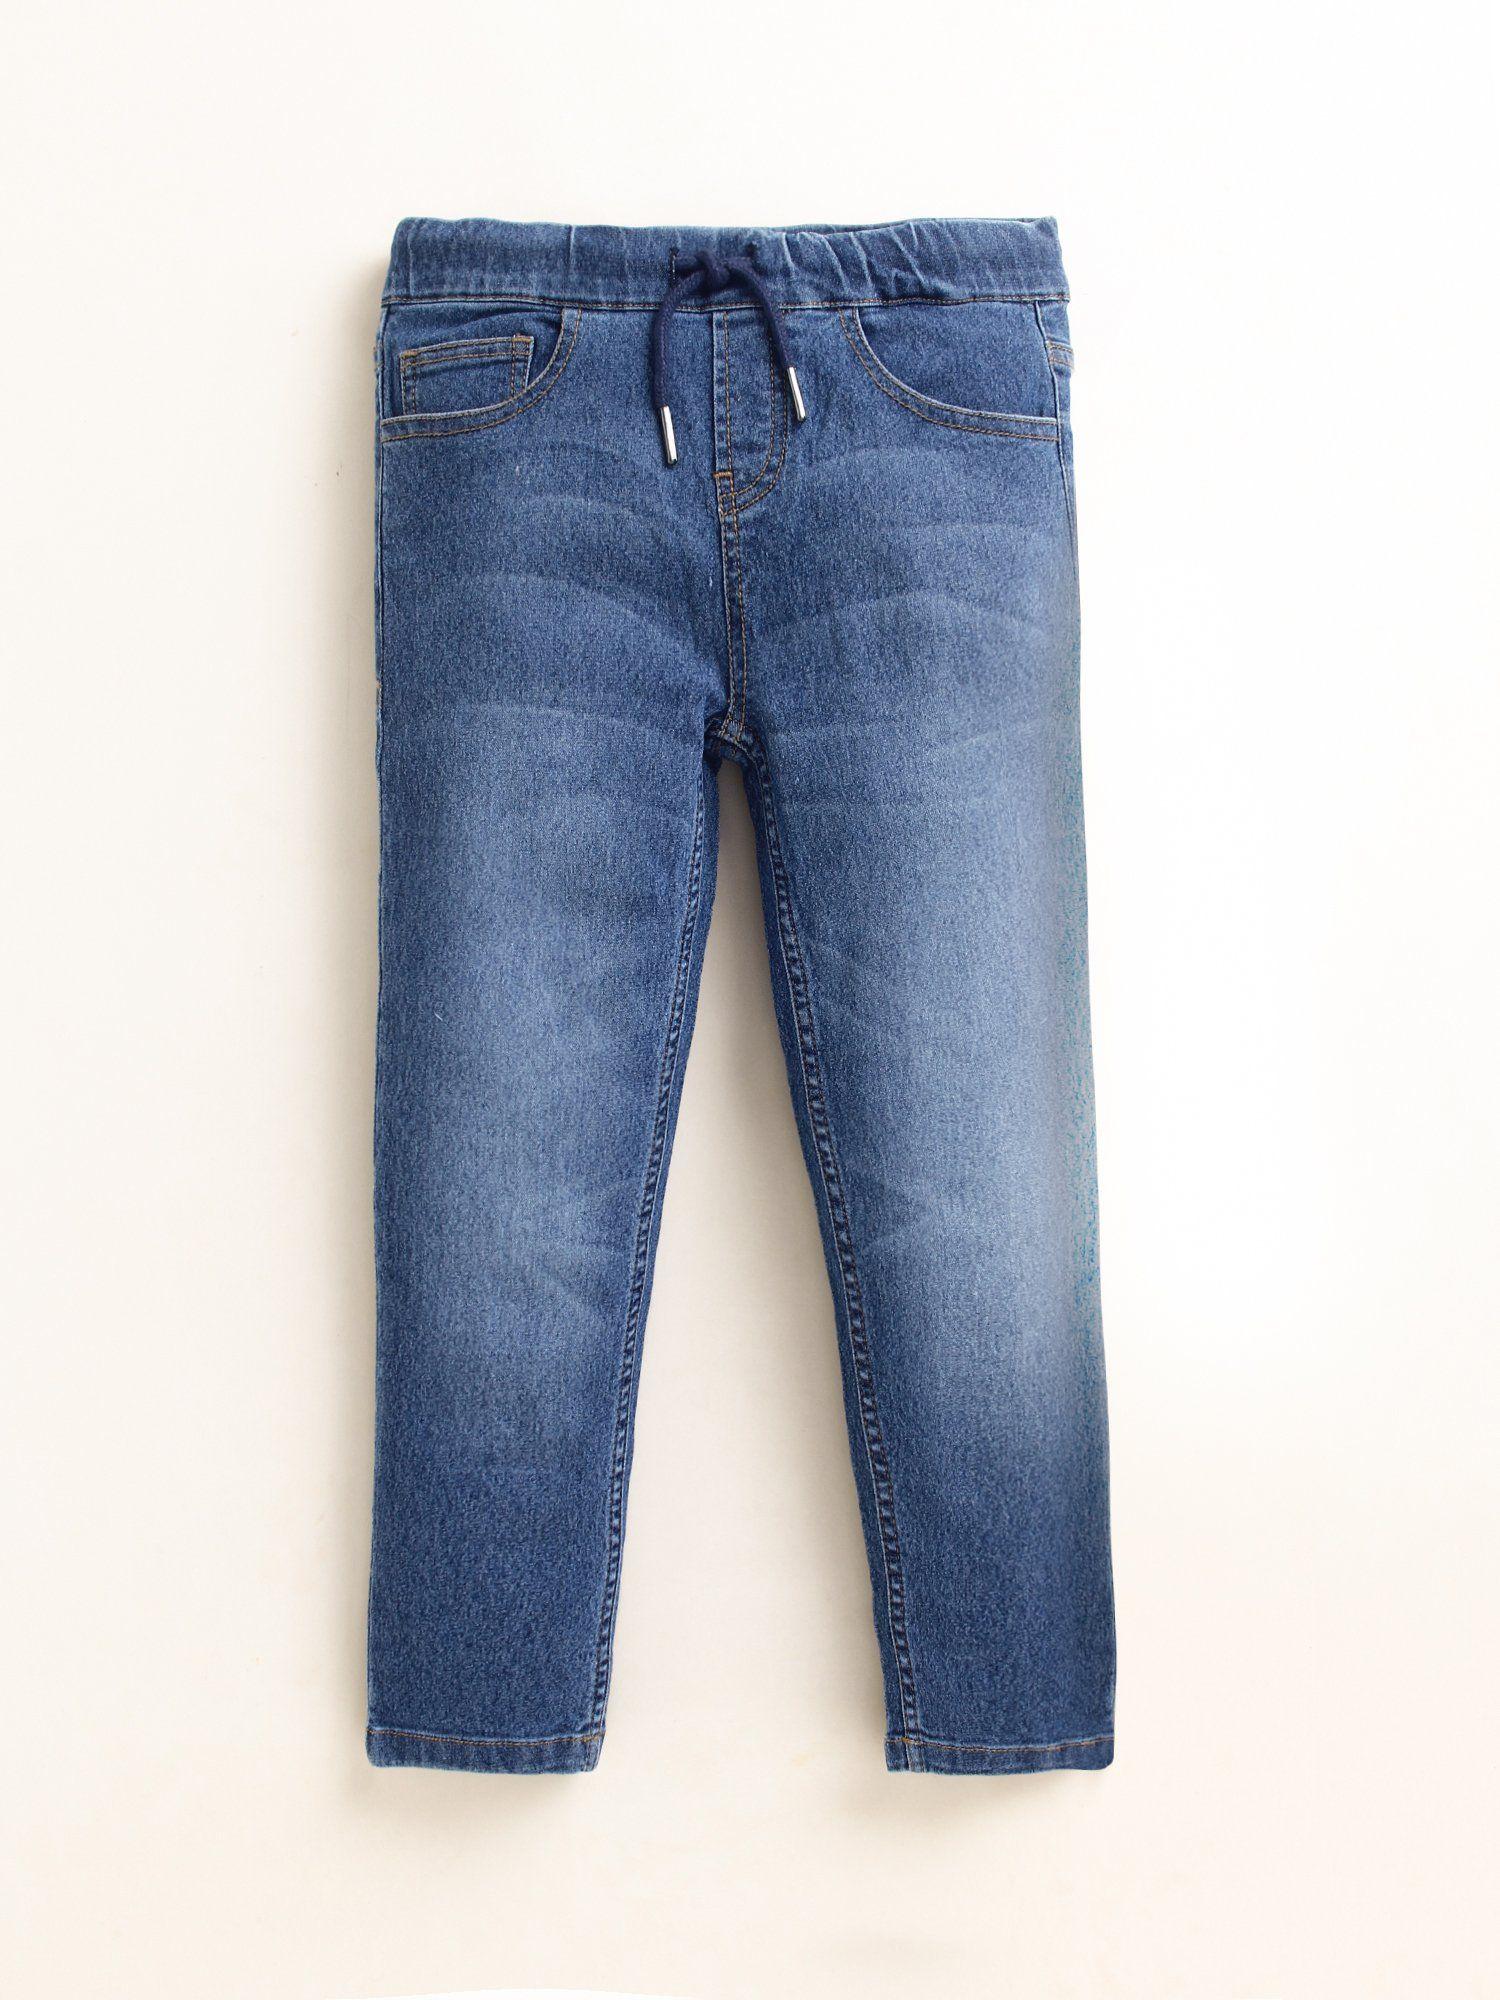 blue washed denim distressed jeans